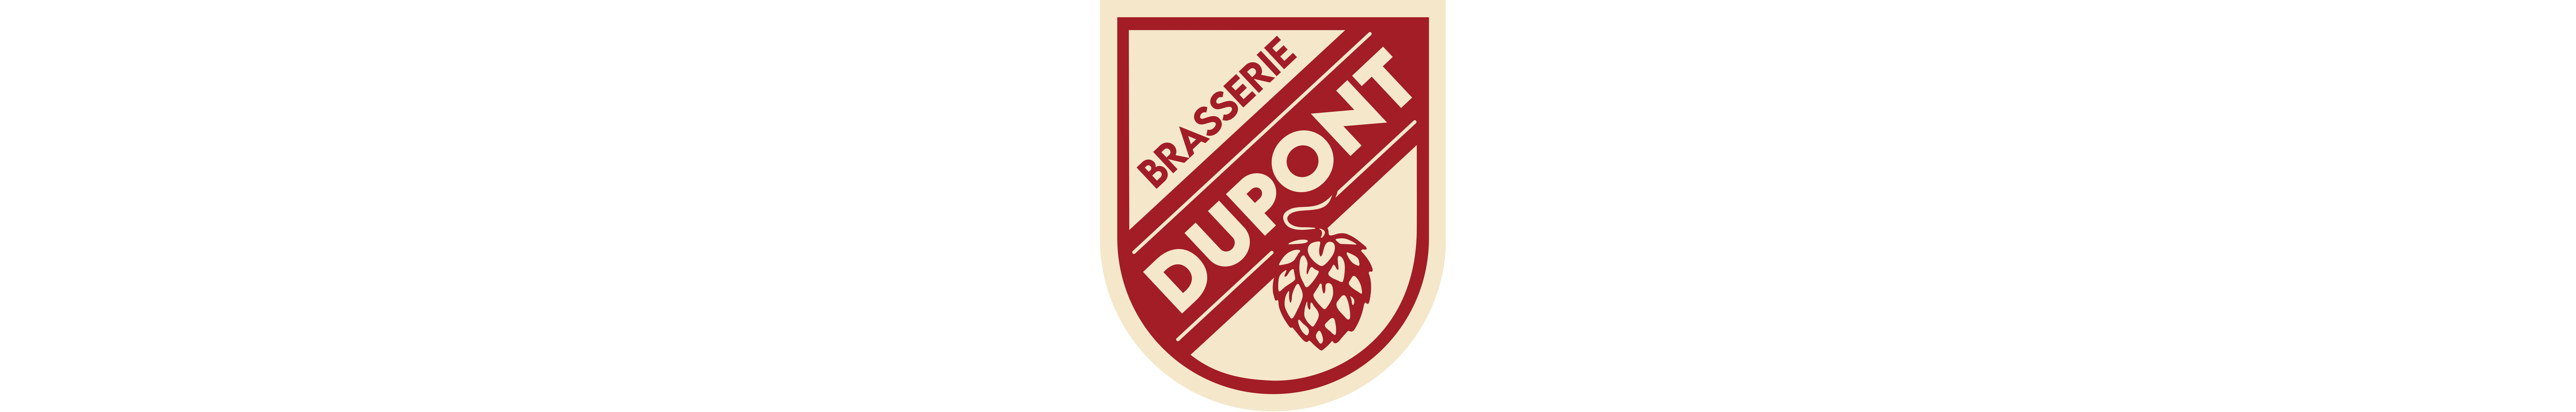 Brouwerij Dupont